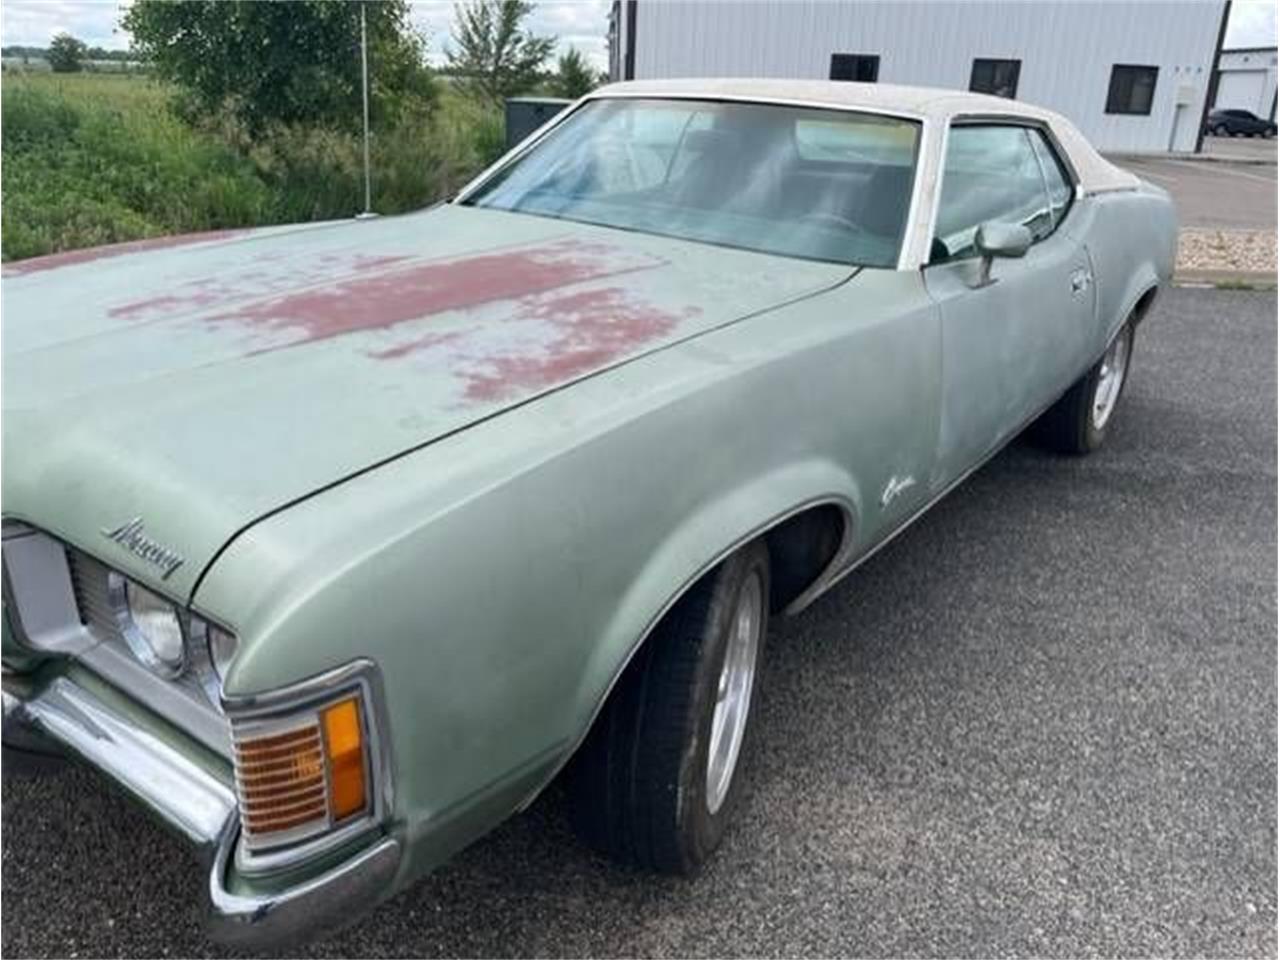 For Sale: 1972 Mercury Cougar in Cadillac, Michigan for sale in Cadillac, MI